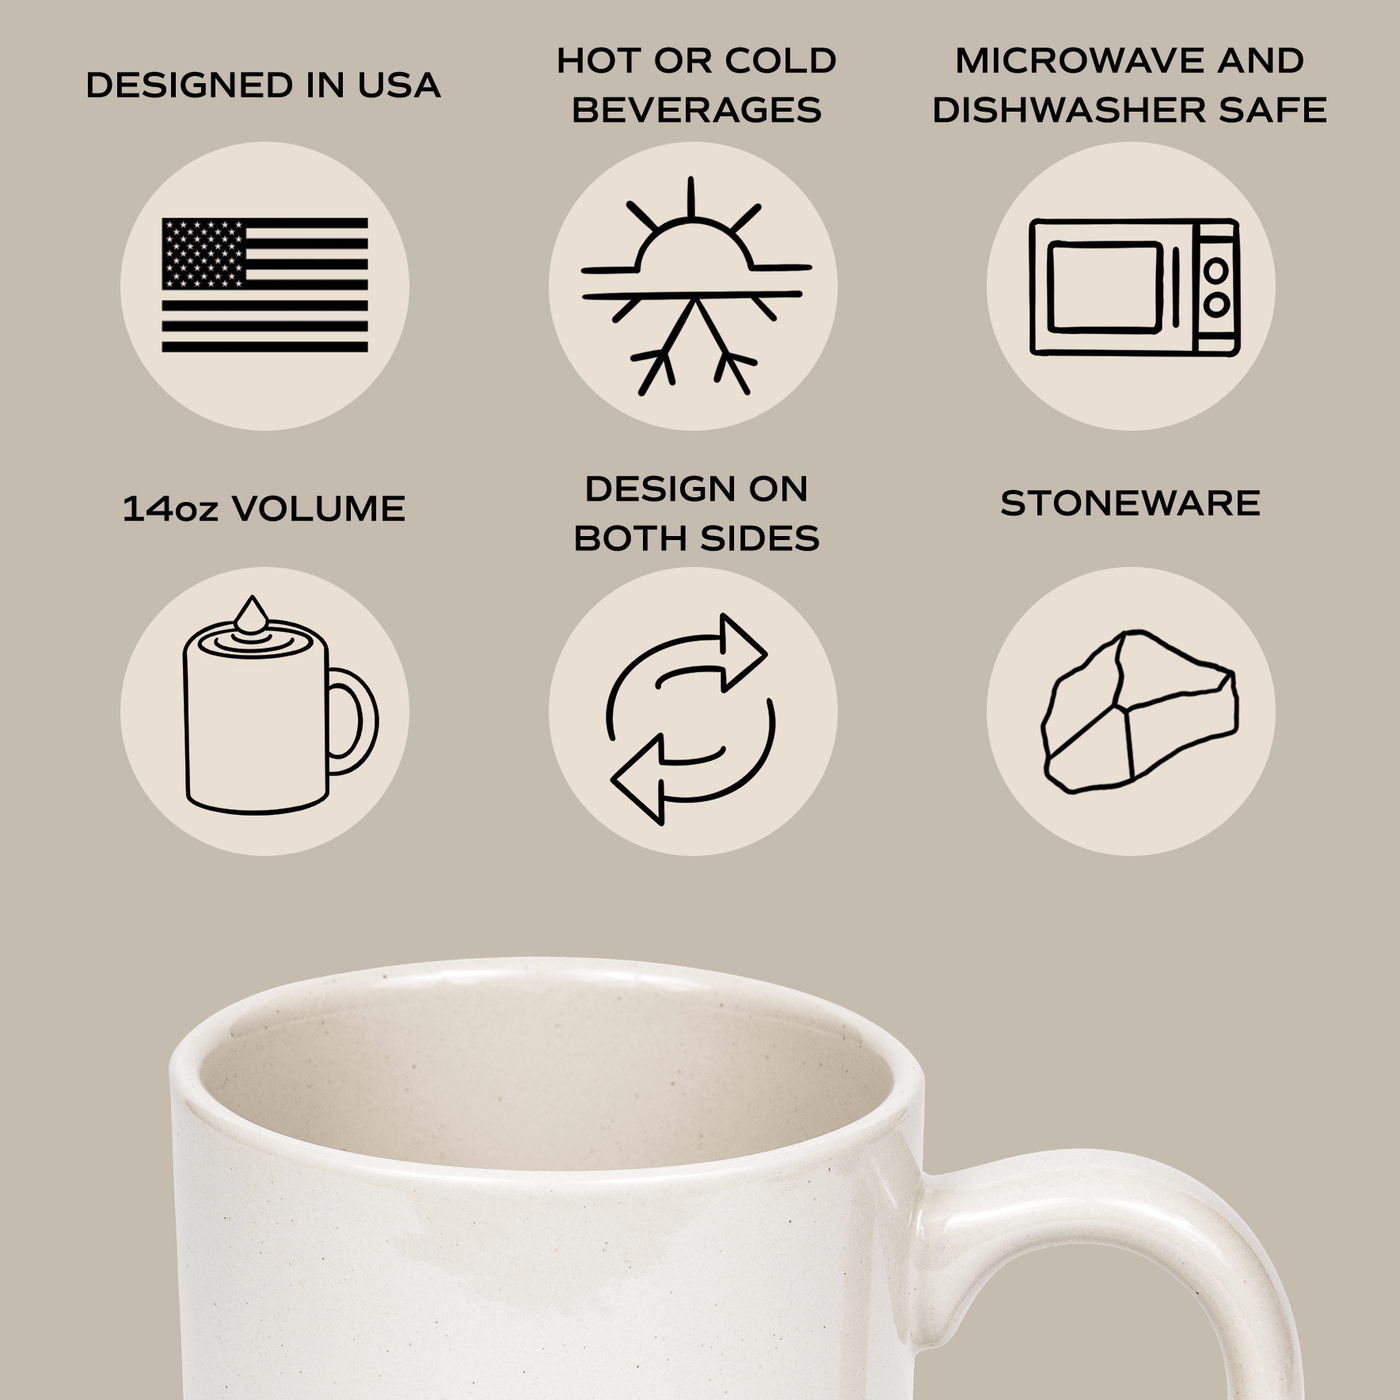 Be Still and Know 14oz. Stoneware Coffee Mug - Sweet Water Decor - Coffee Mugs